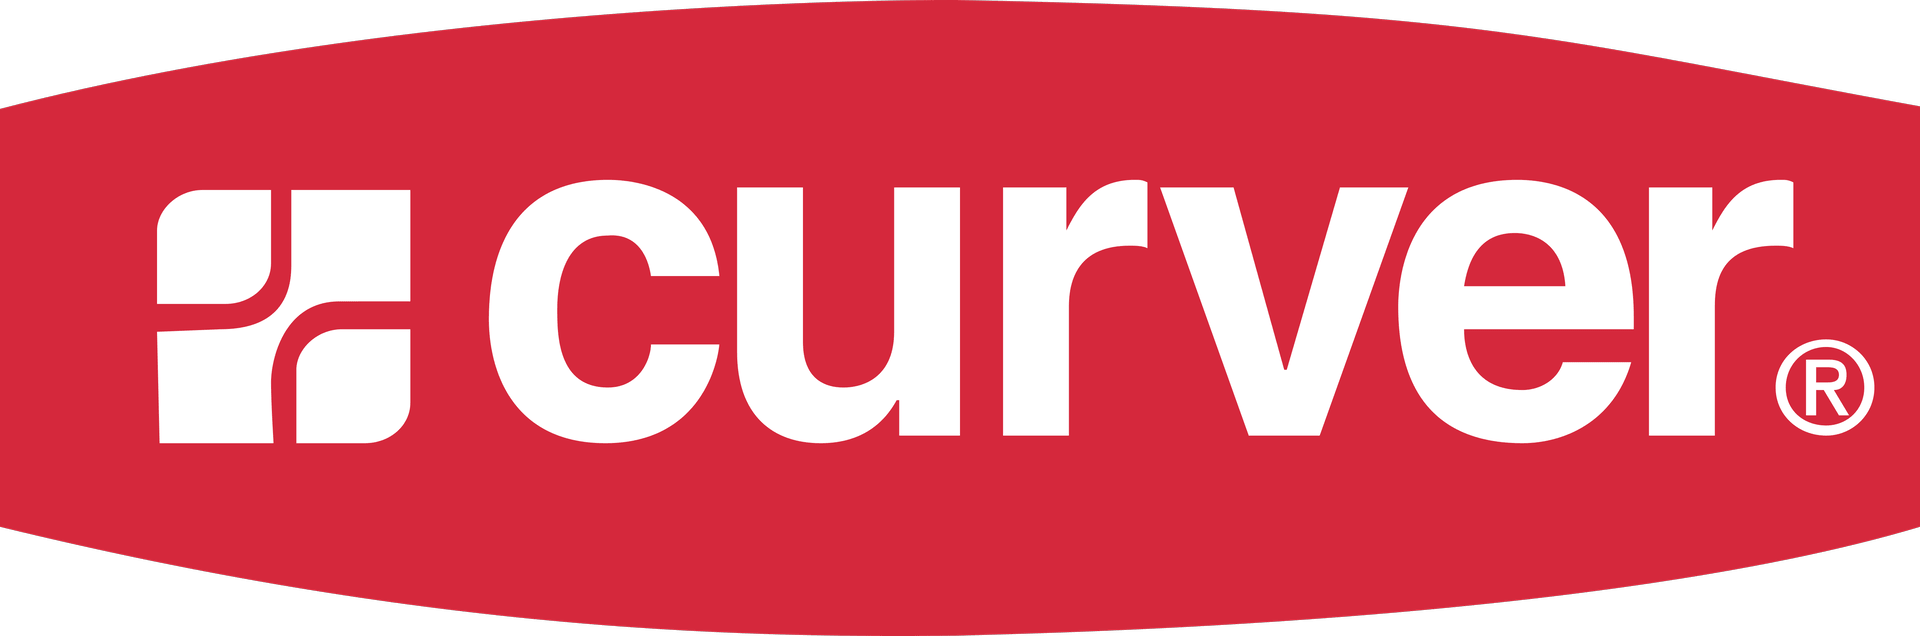 Curver